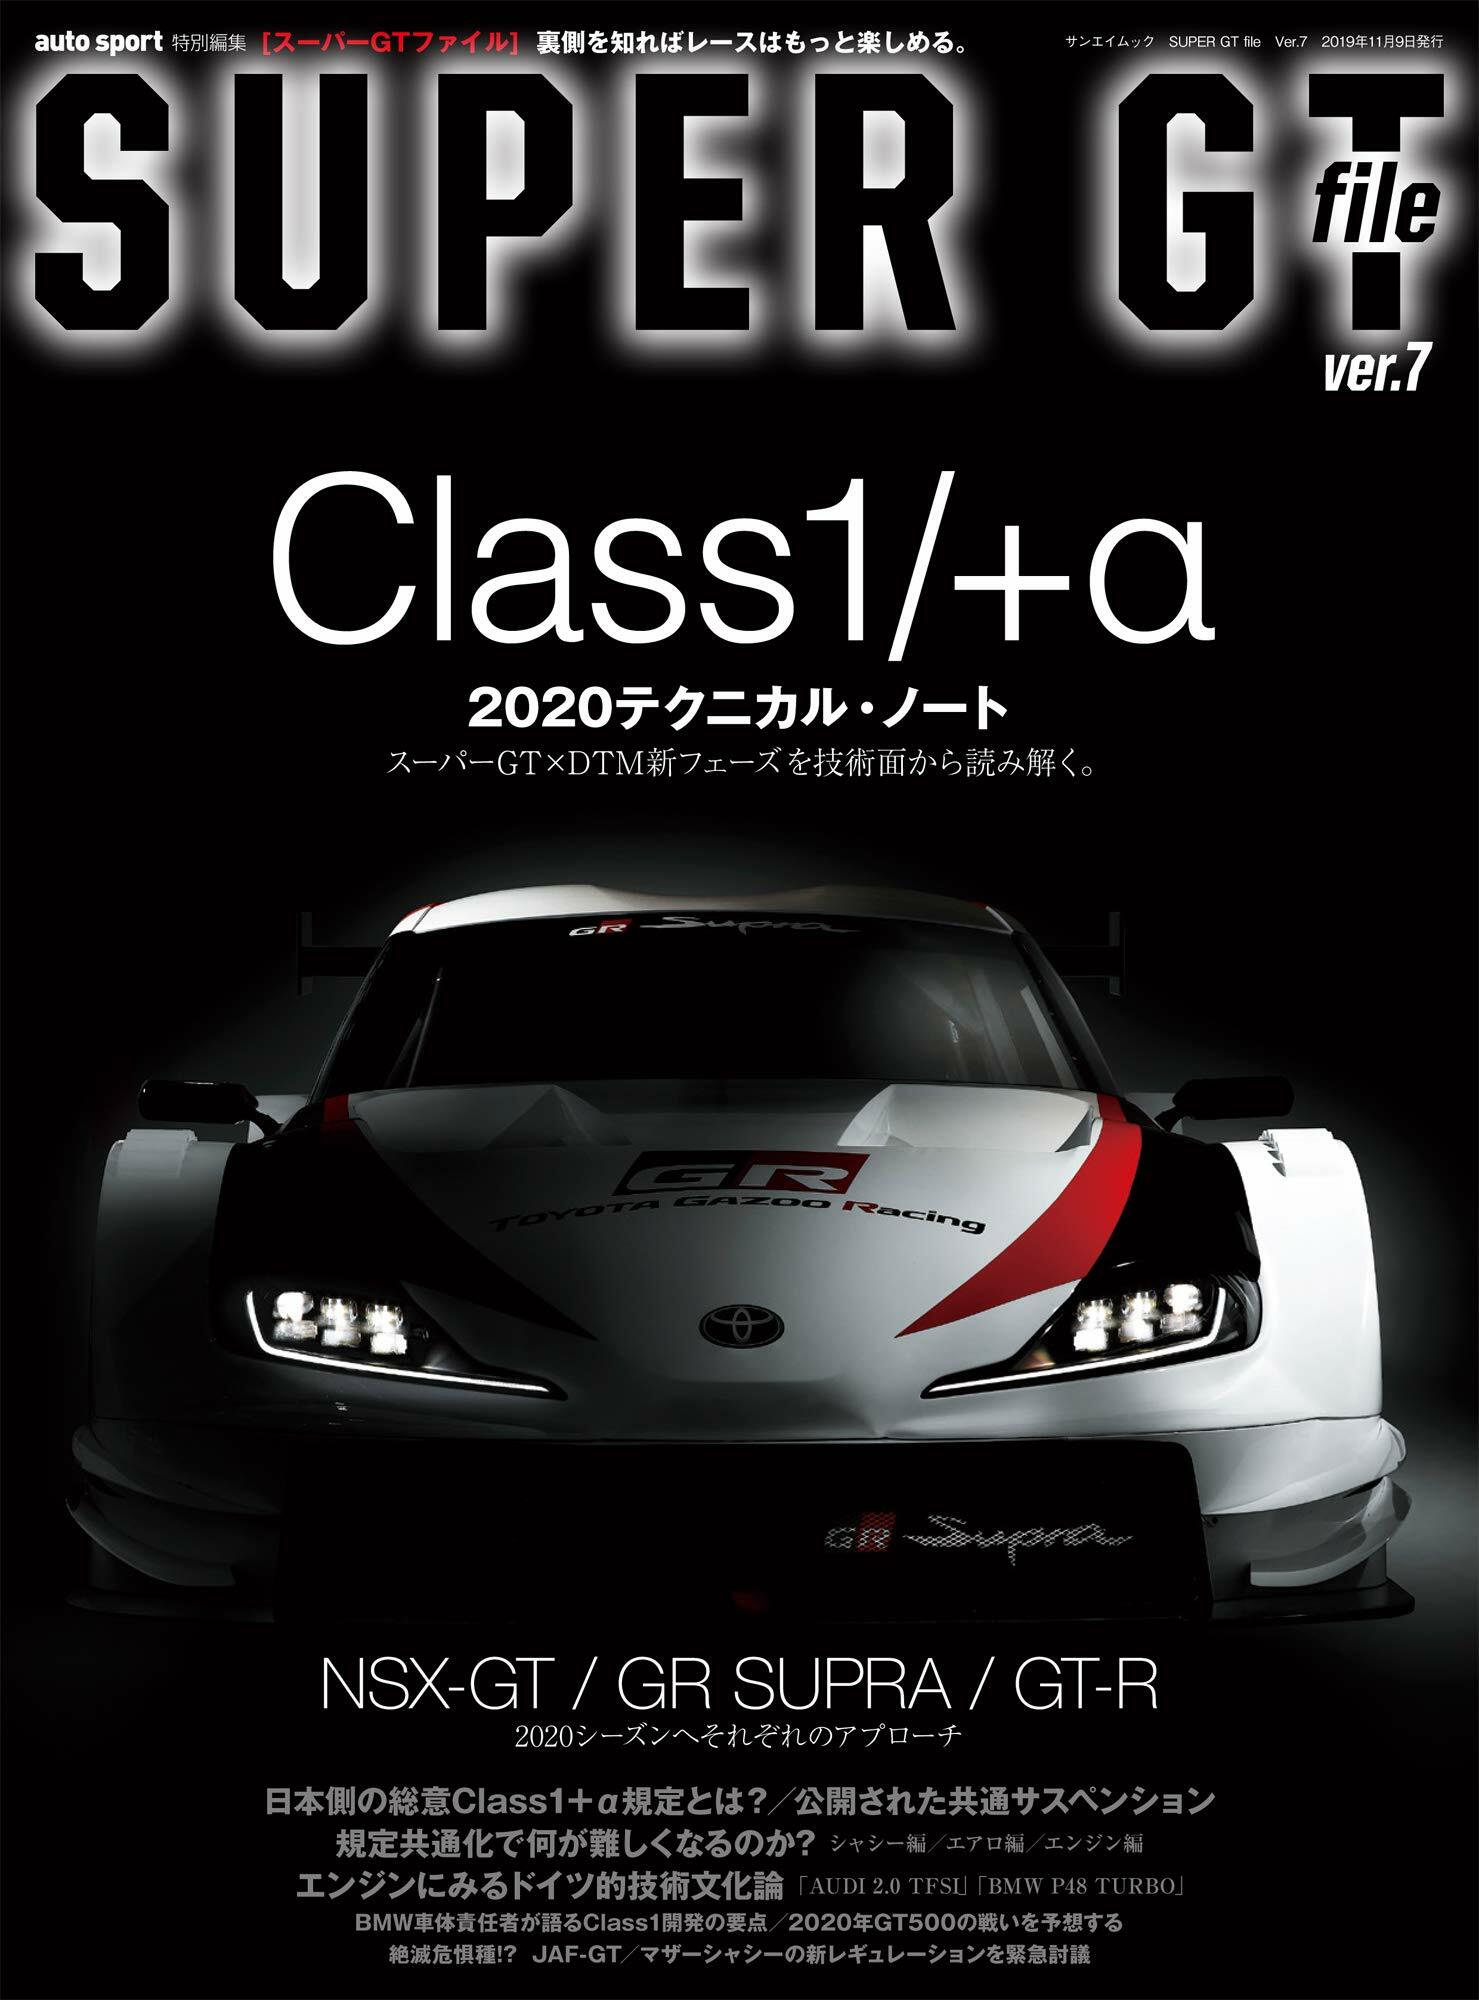 SUPER GT FILE Ver.7